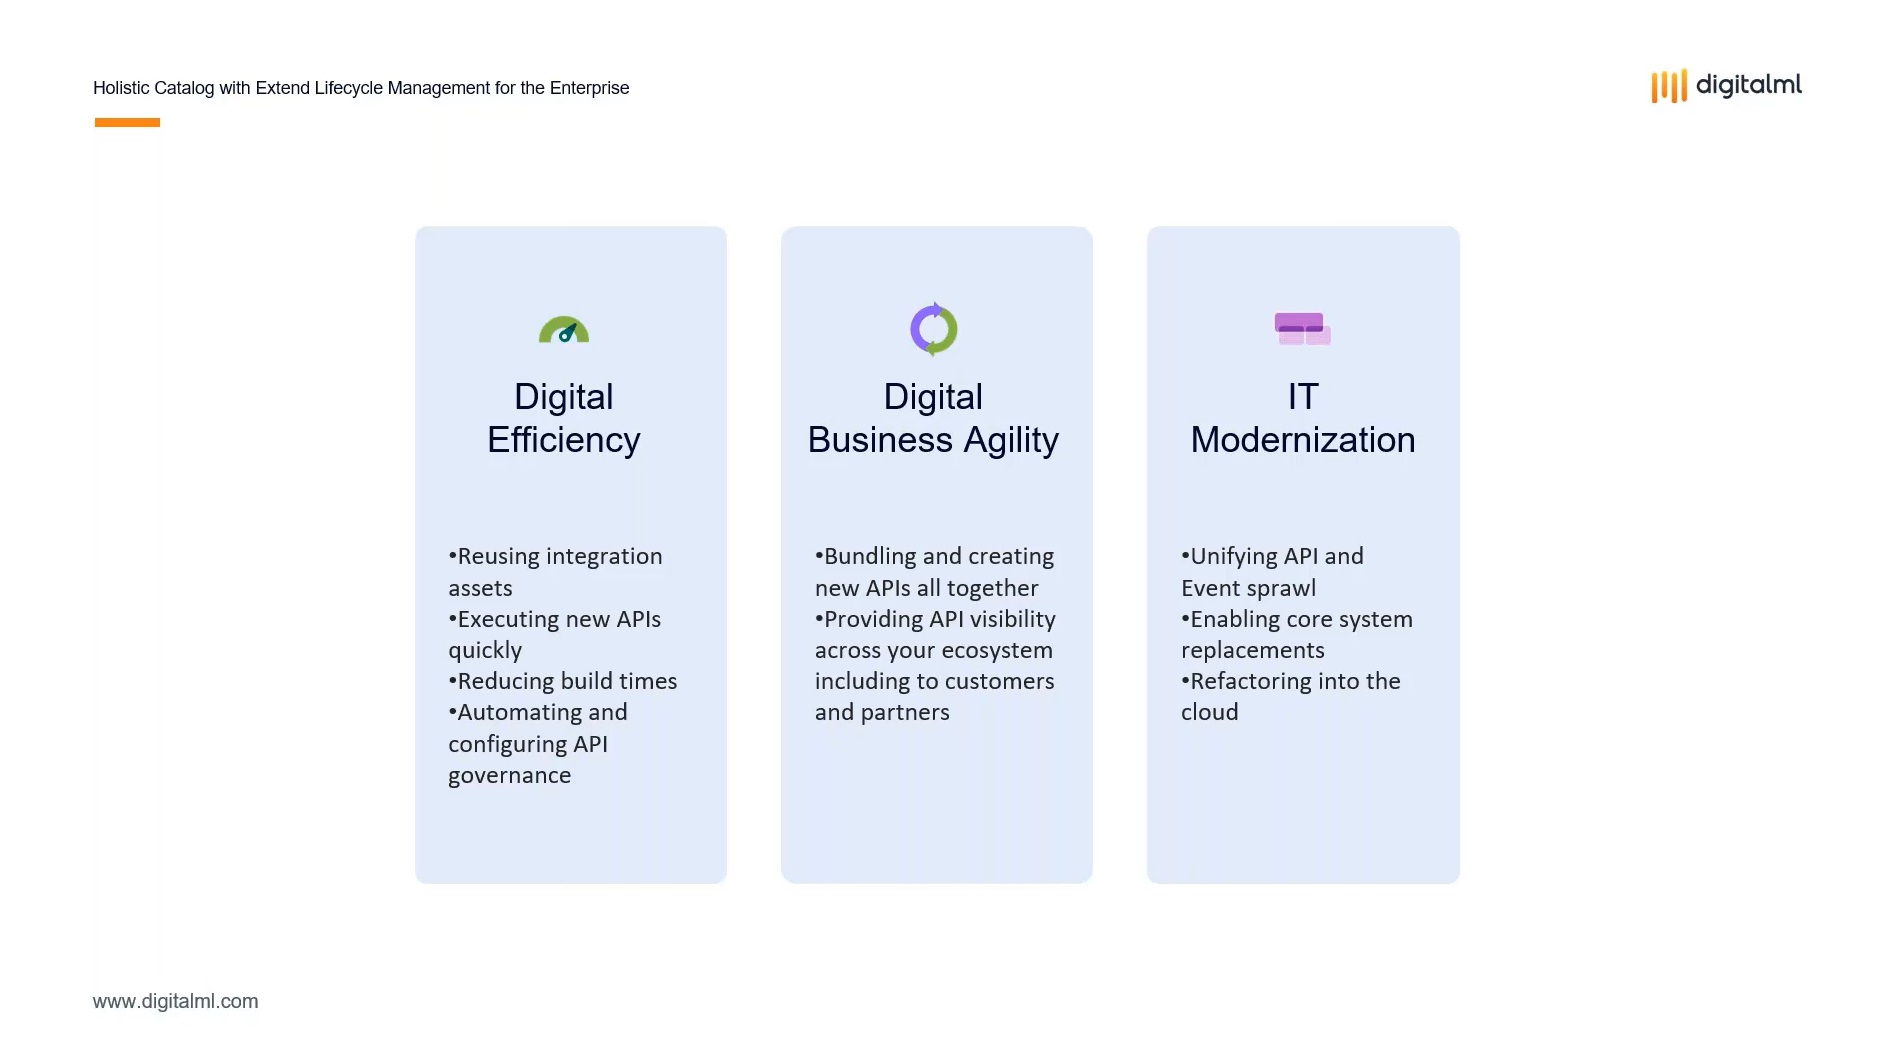 Three areas of API maturity: digital efficiency, business agility, and IT modernization